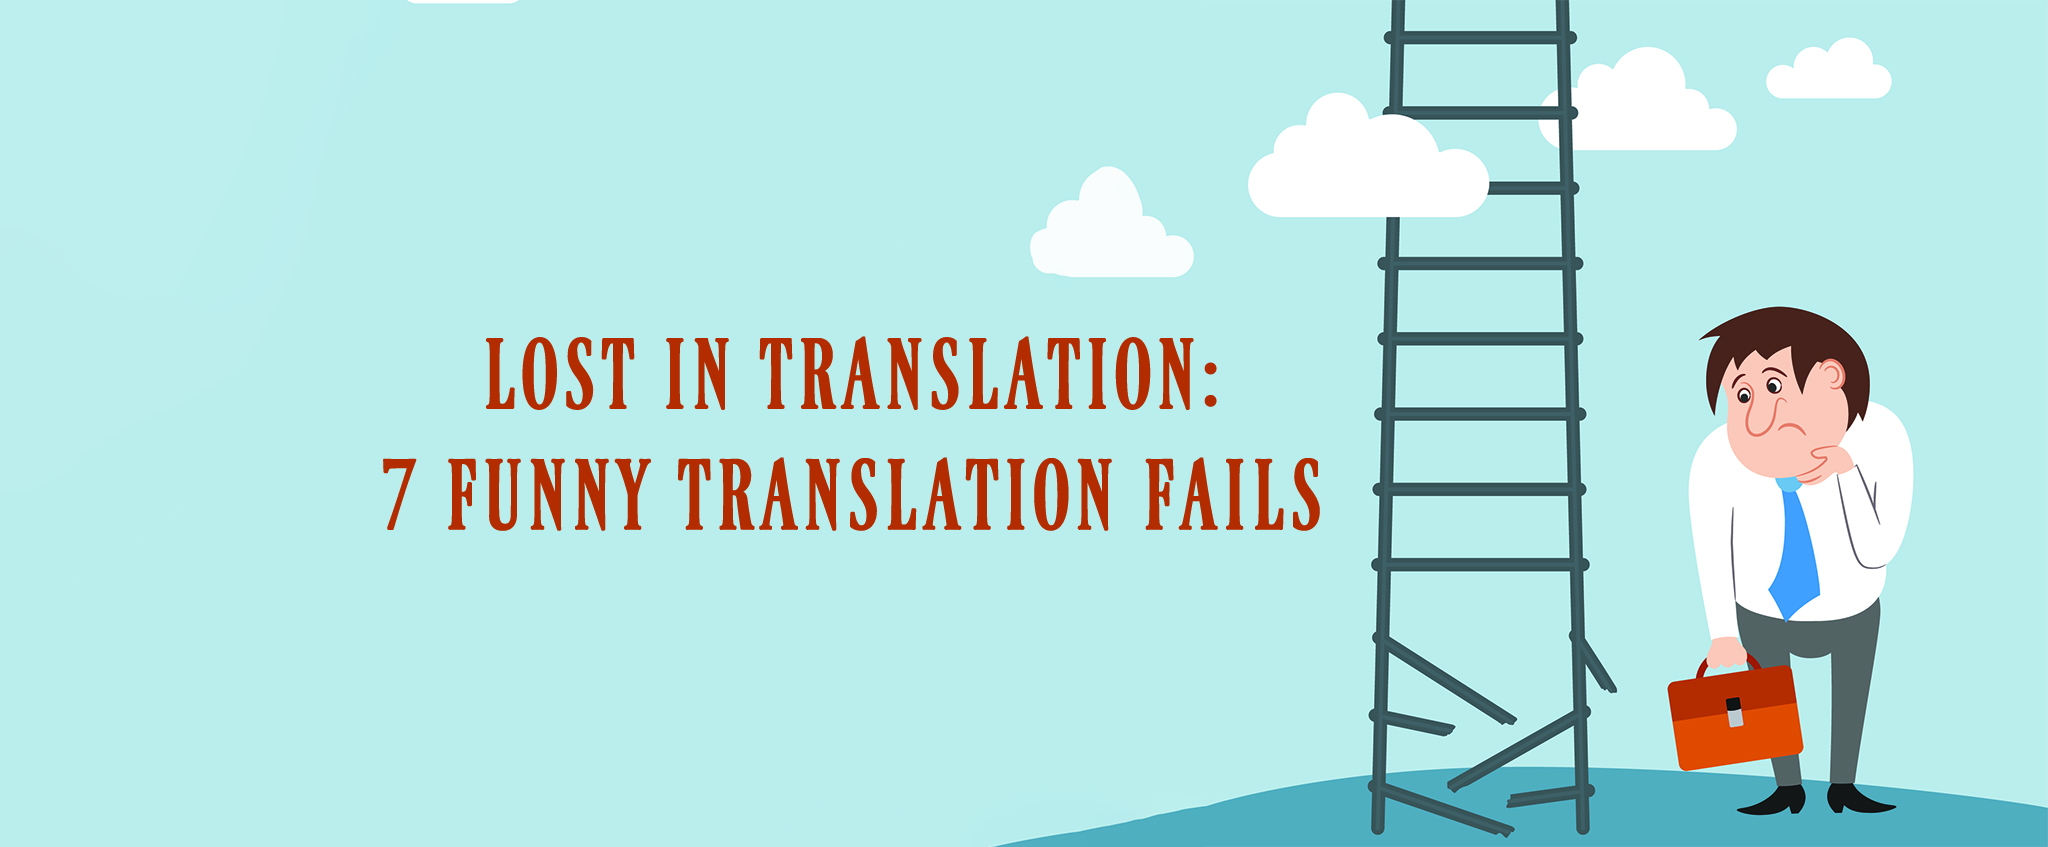 Lost In Translation: 7 Funny Translation Fails - CCC International